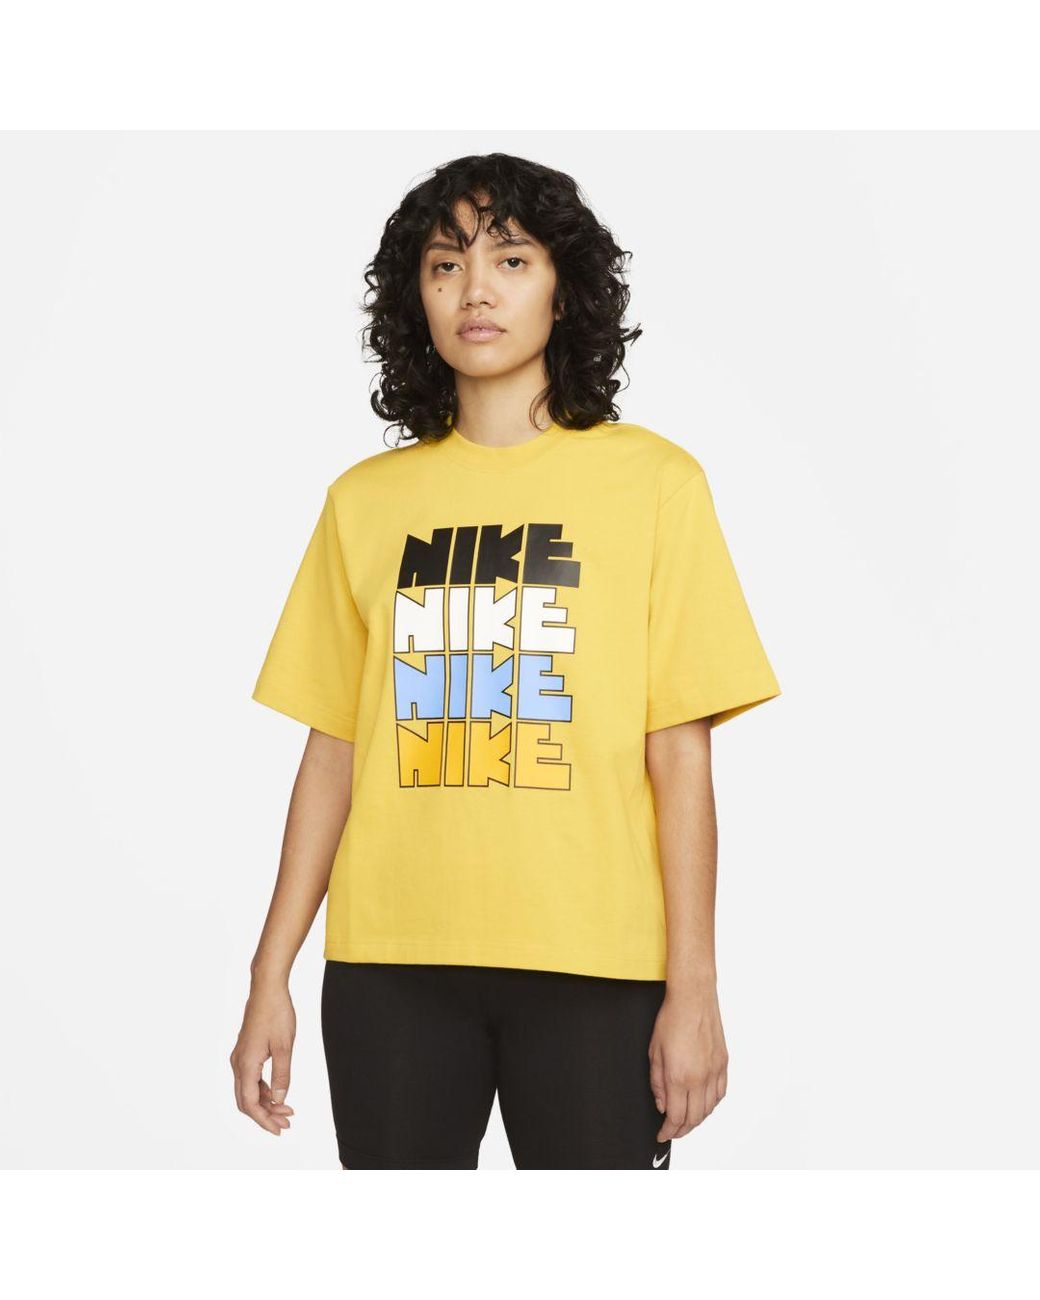 Nike Sportswear Circa 72 Boxy T-shirt in Yellow | Lyst